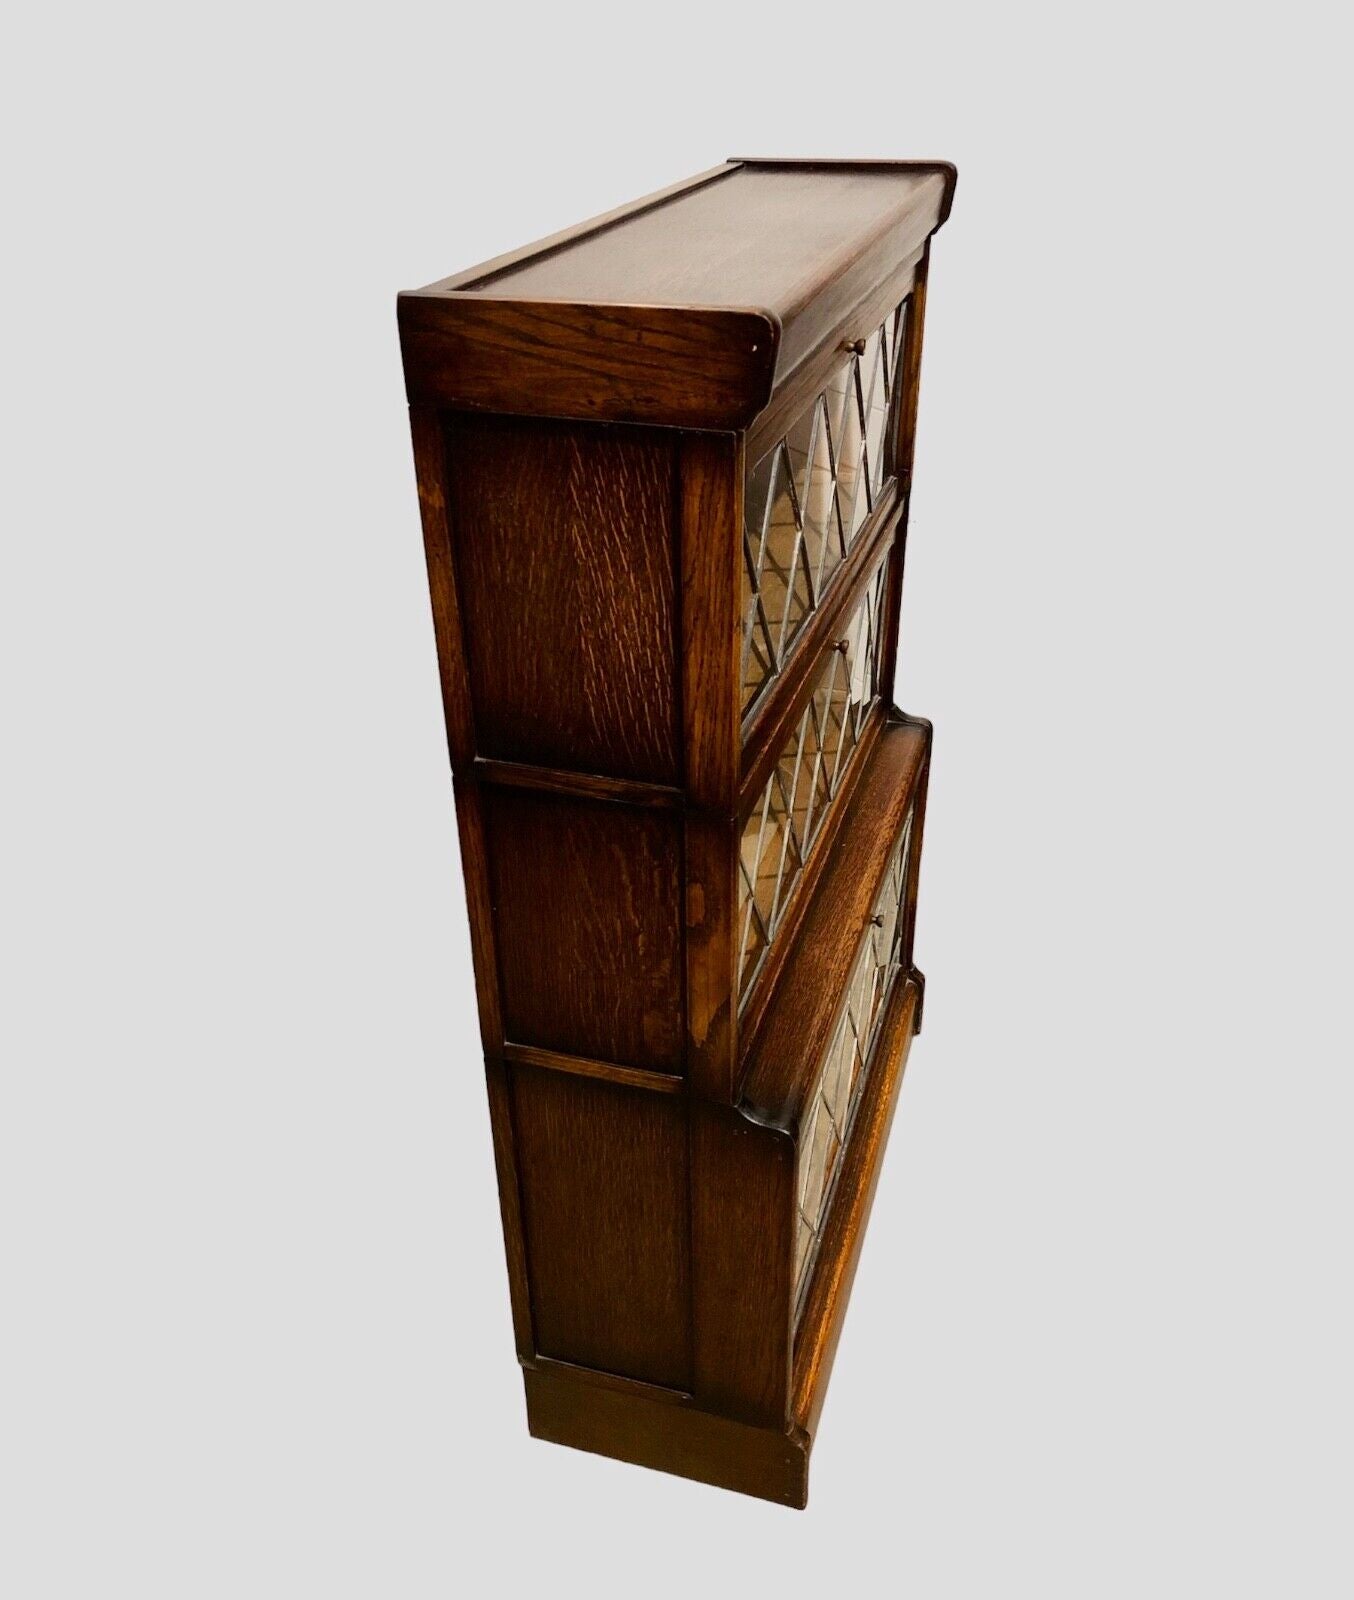 000777....Handsome Vintage Barristers Style Bookcase / Stacking Glazed Bookshelves